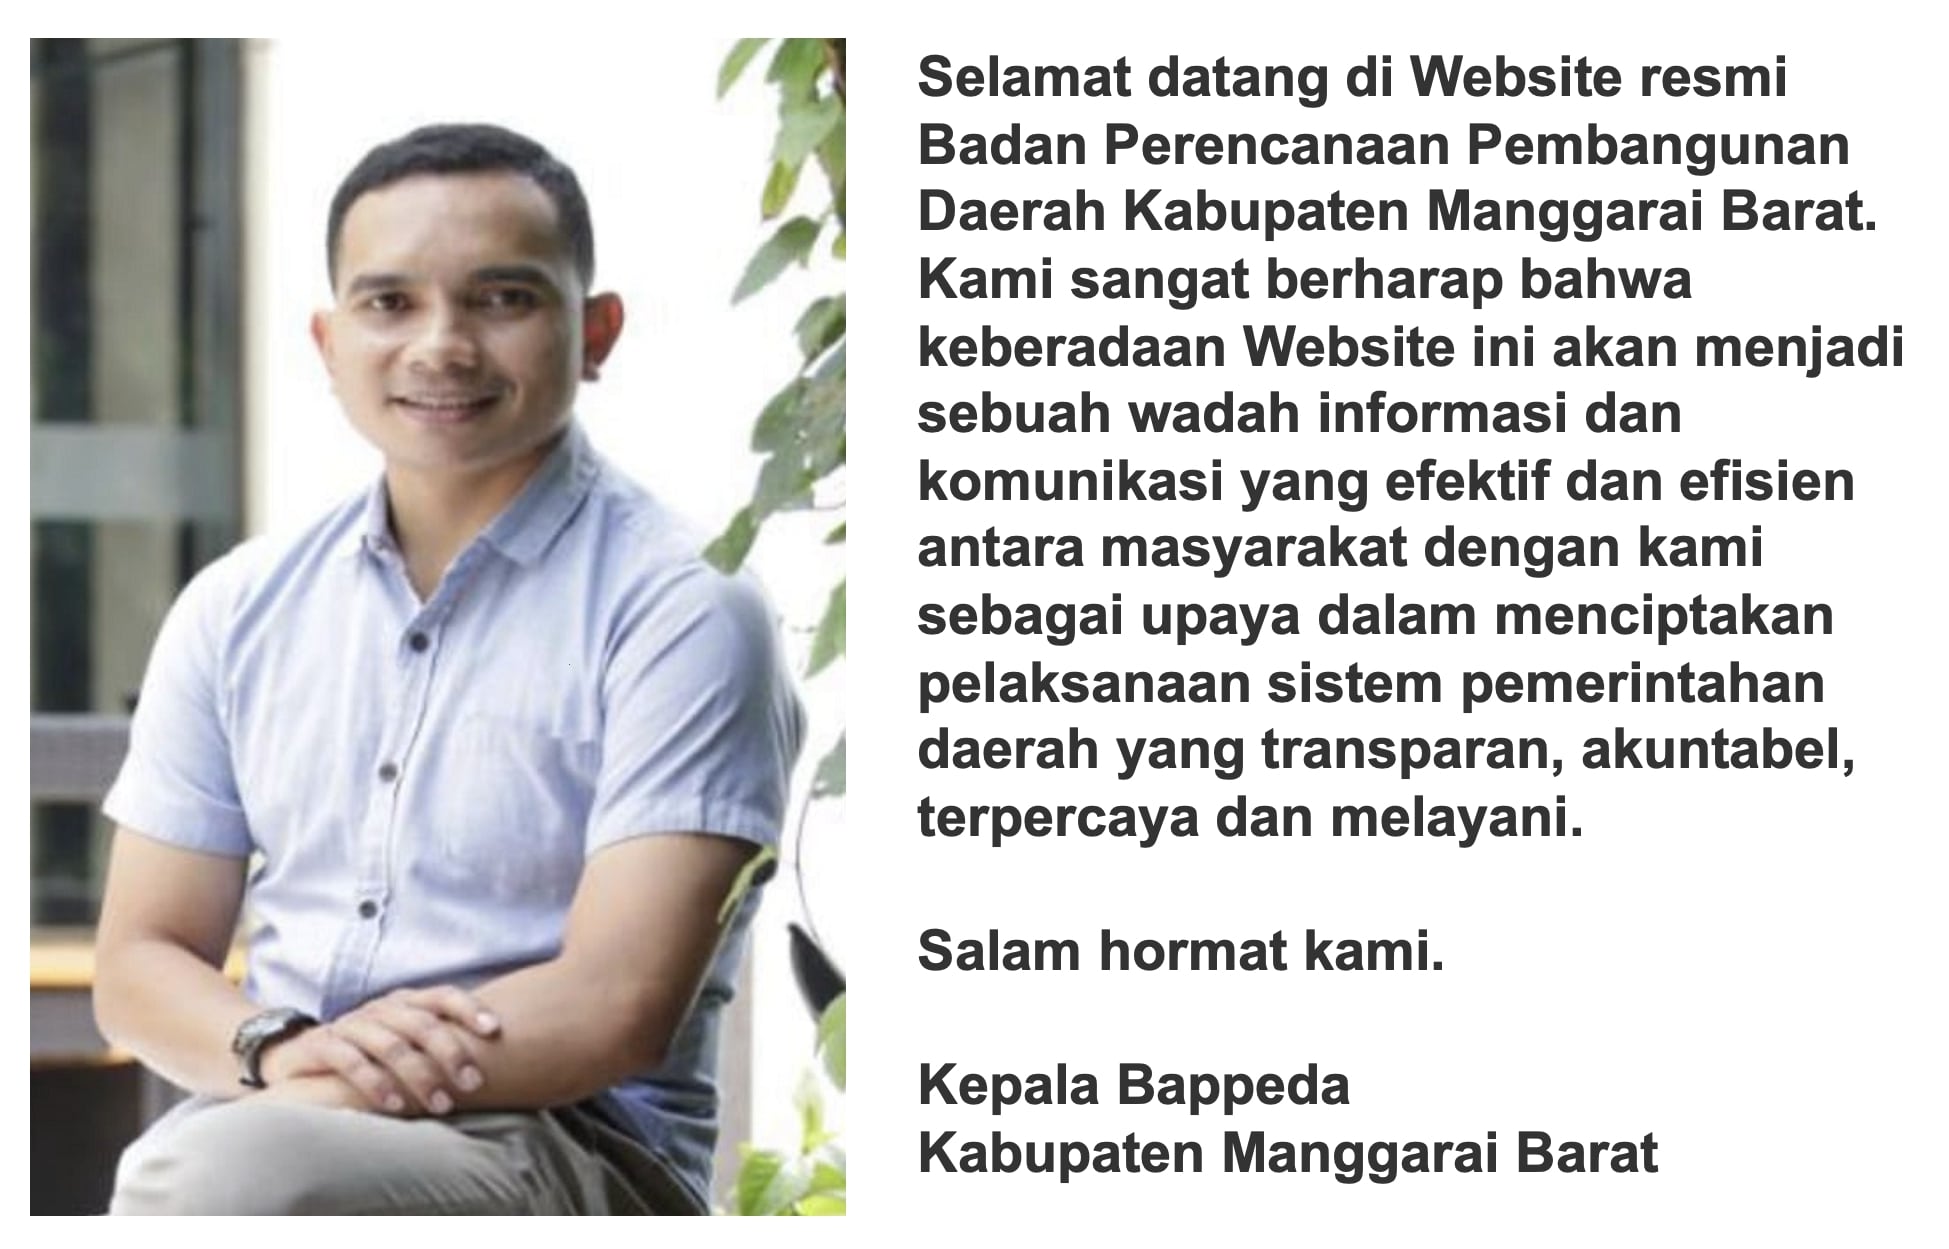 Sambutan Kepala Bappeda Kabupaten Manggarai Barat